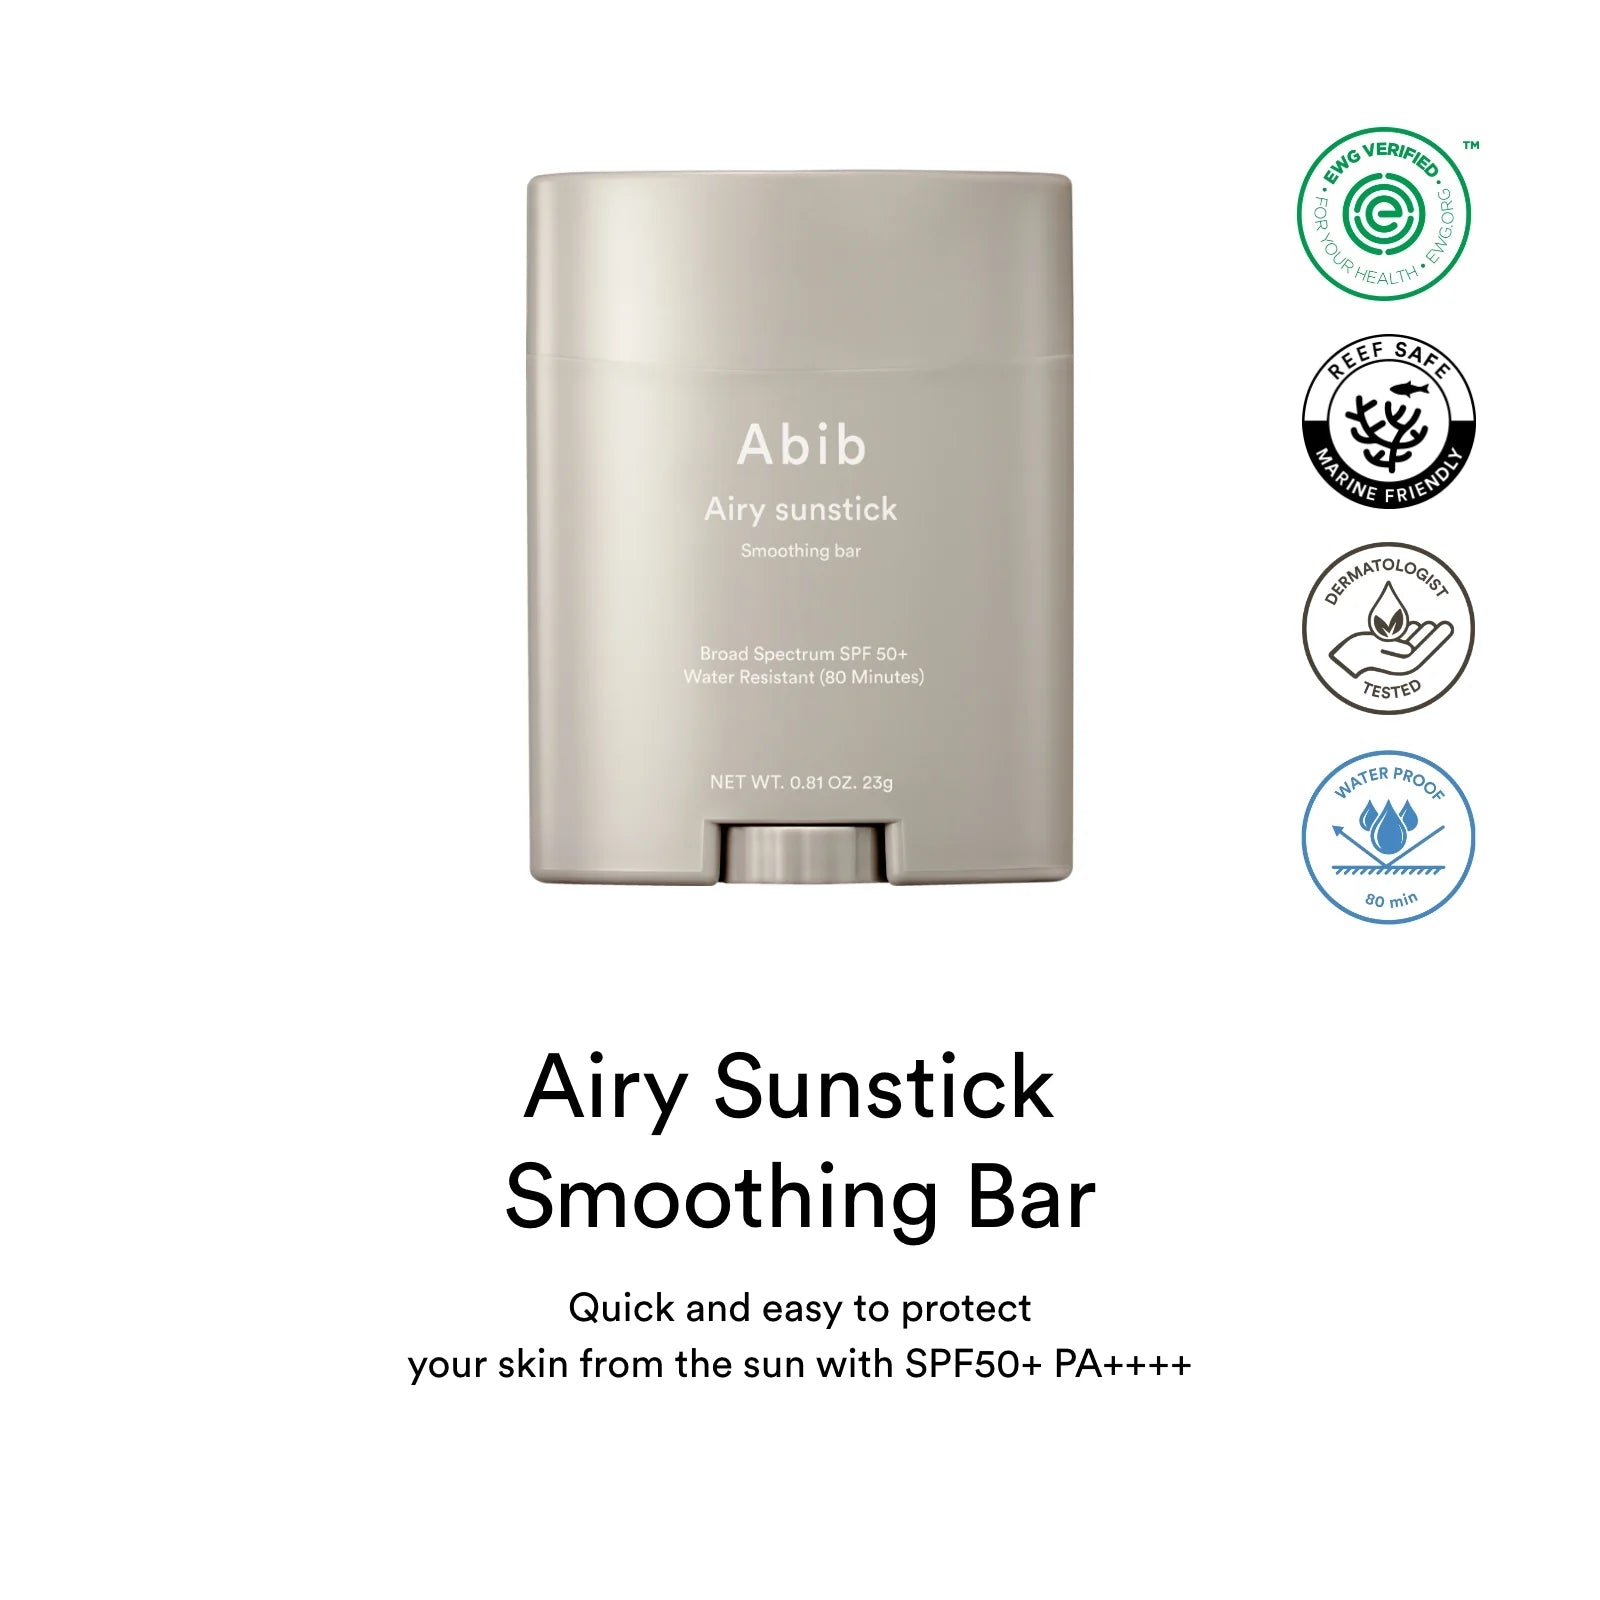 Abib - Airy Sunstick Smoothing Bar